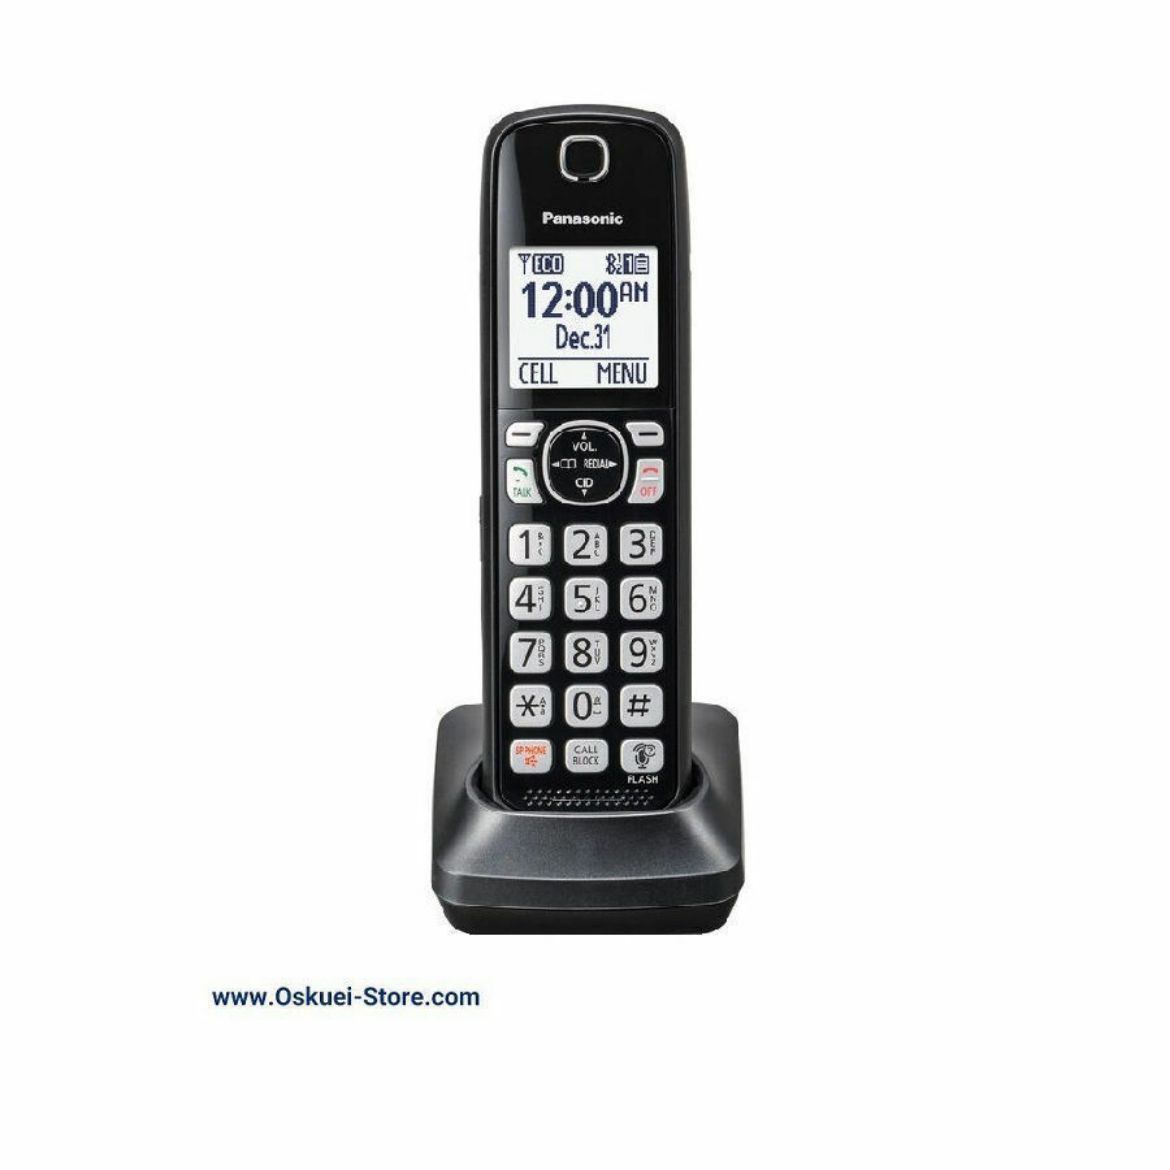 Panasonic KX-TGFA51 Cordless Telephone Black Front